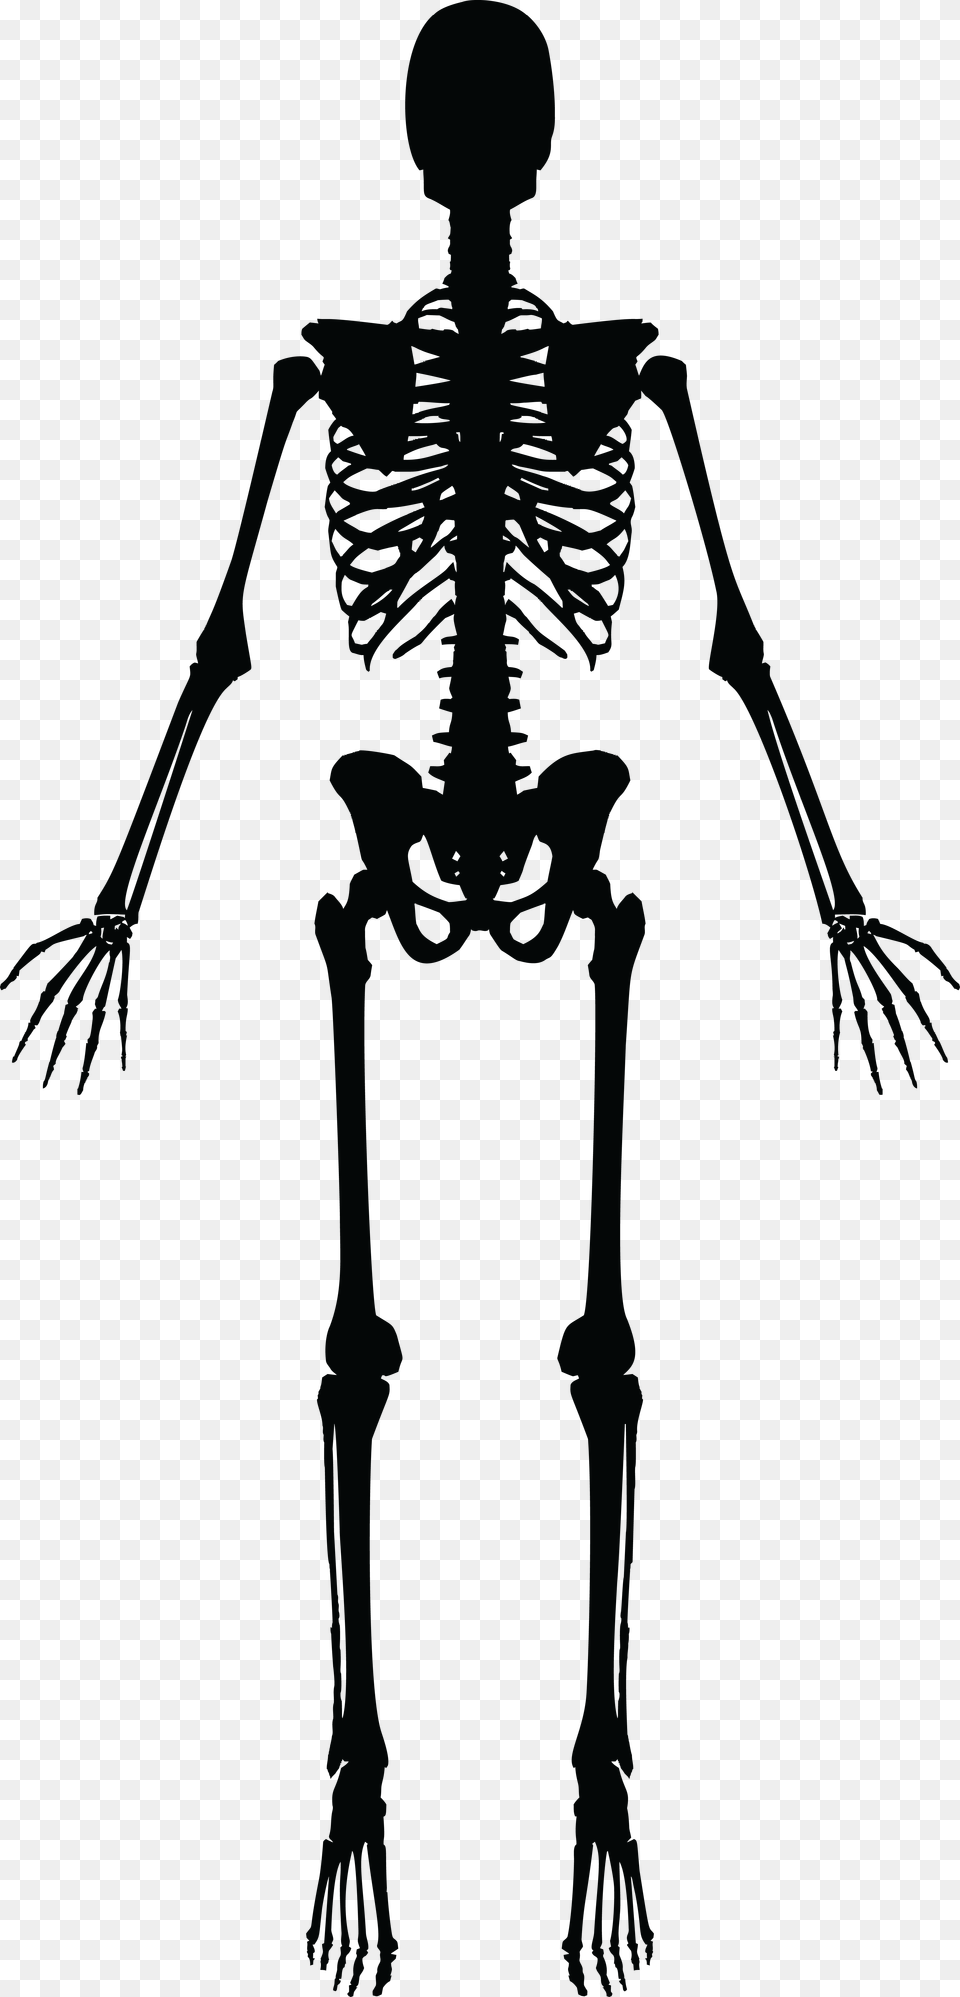 Skeleton Silhouette Skeleton Clipart Black And White, Cross, Symbol Png